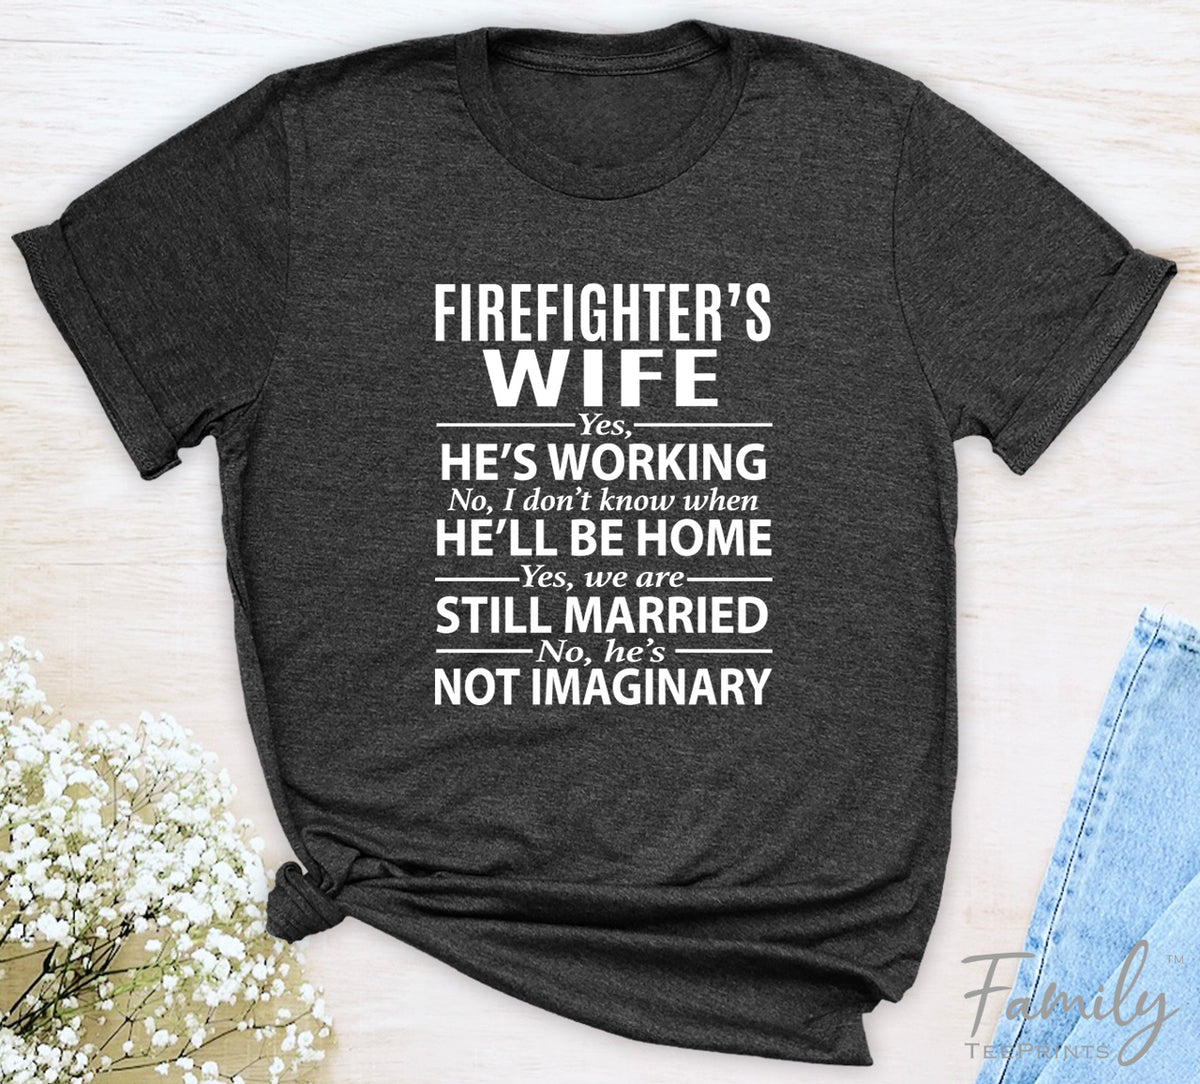 Firefighter's Wife Yes, He's Working - Unisex T-shirt - Firefighter's Wife Shirt - Gift for Firefighter's Wife - familyteeprints